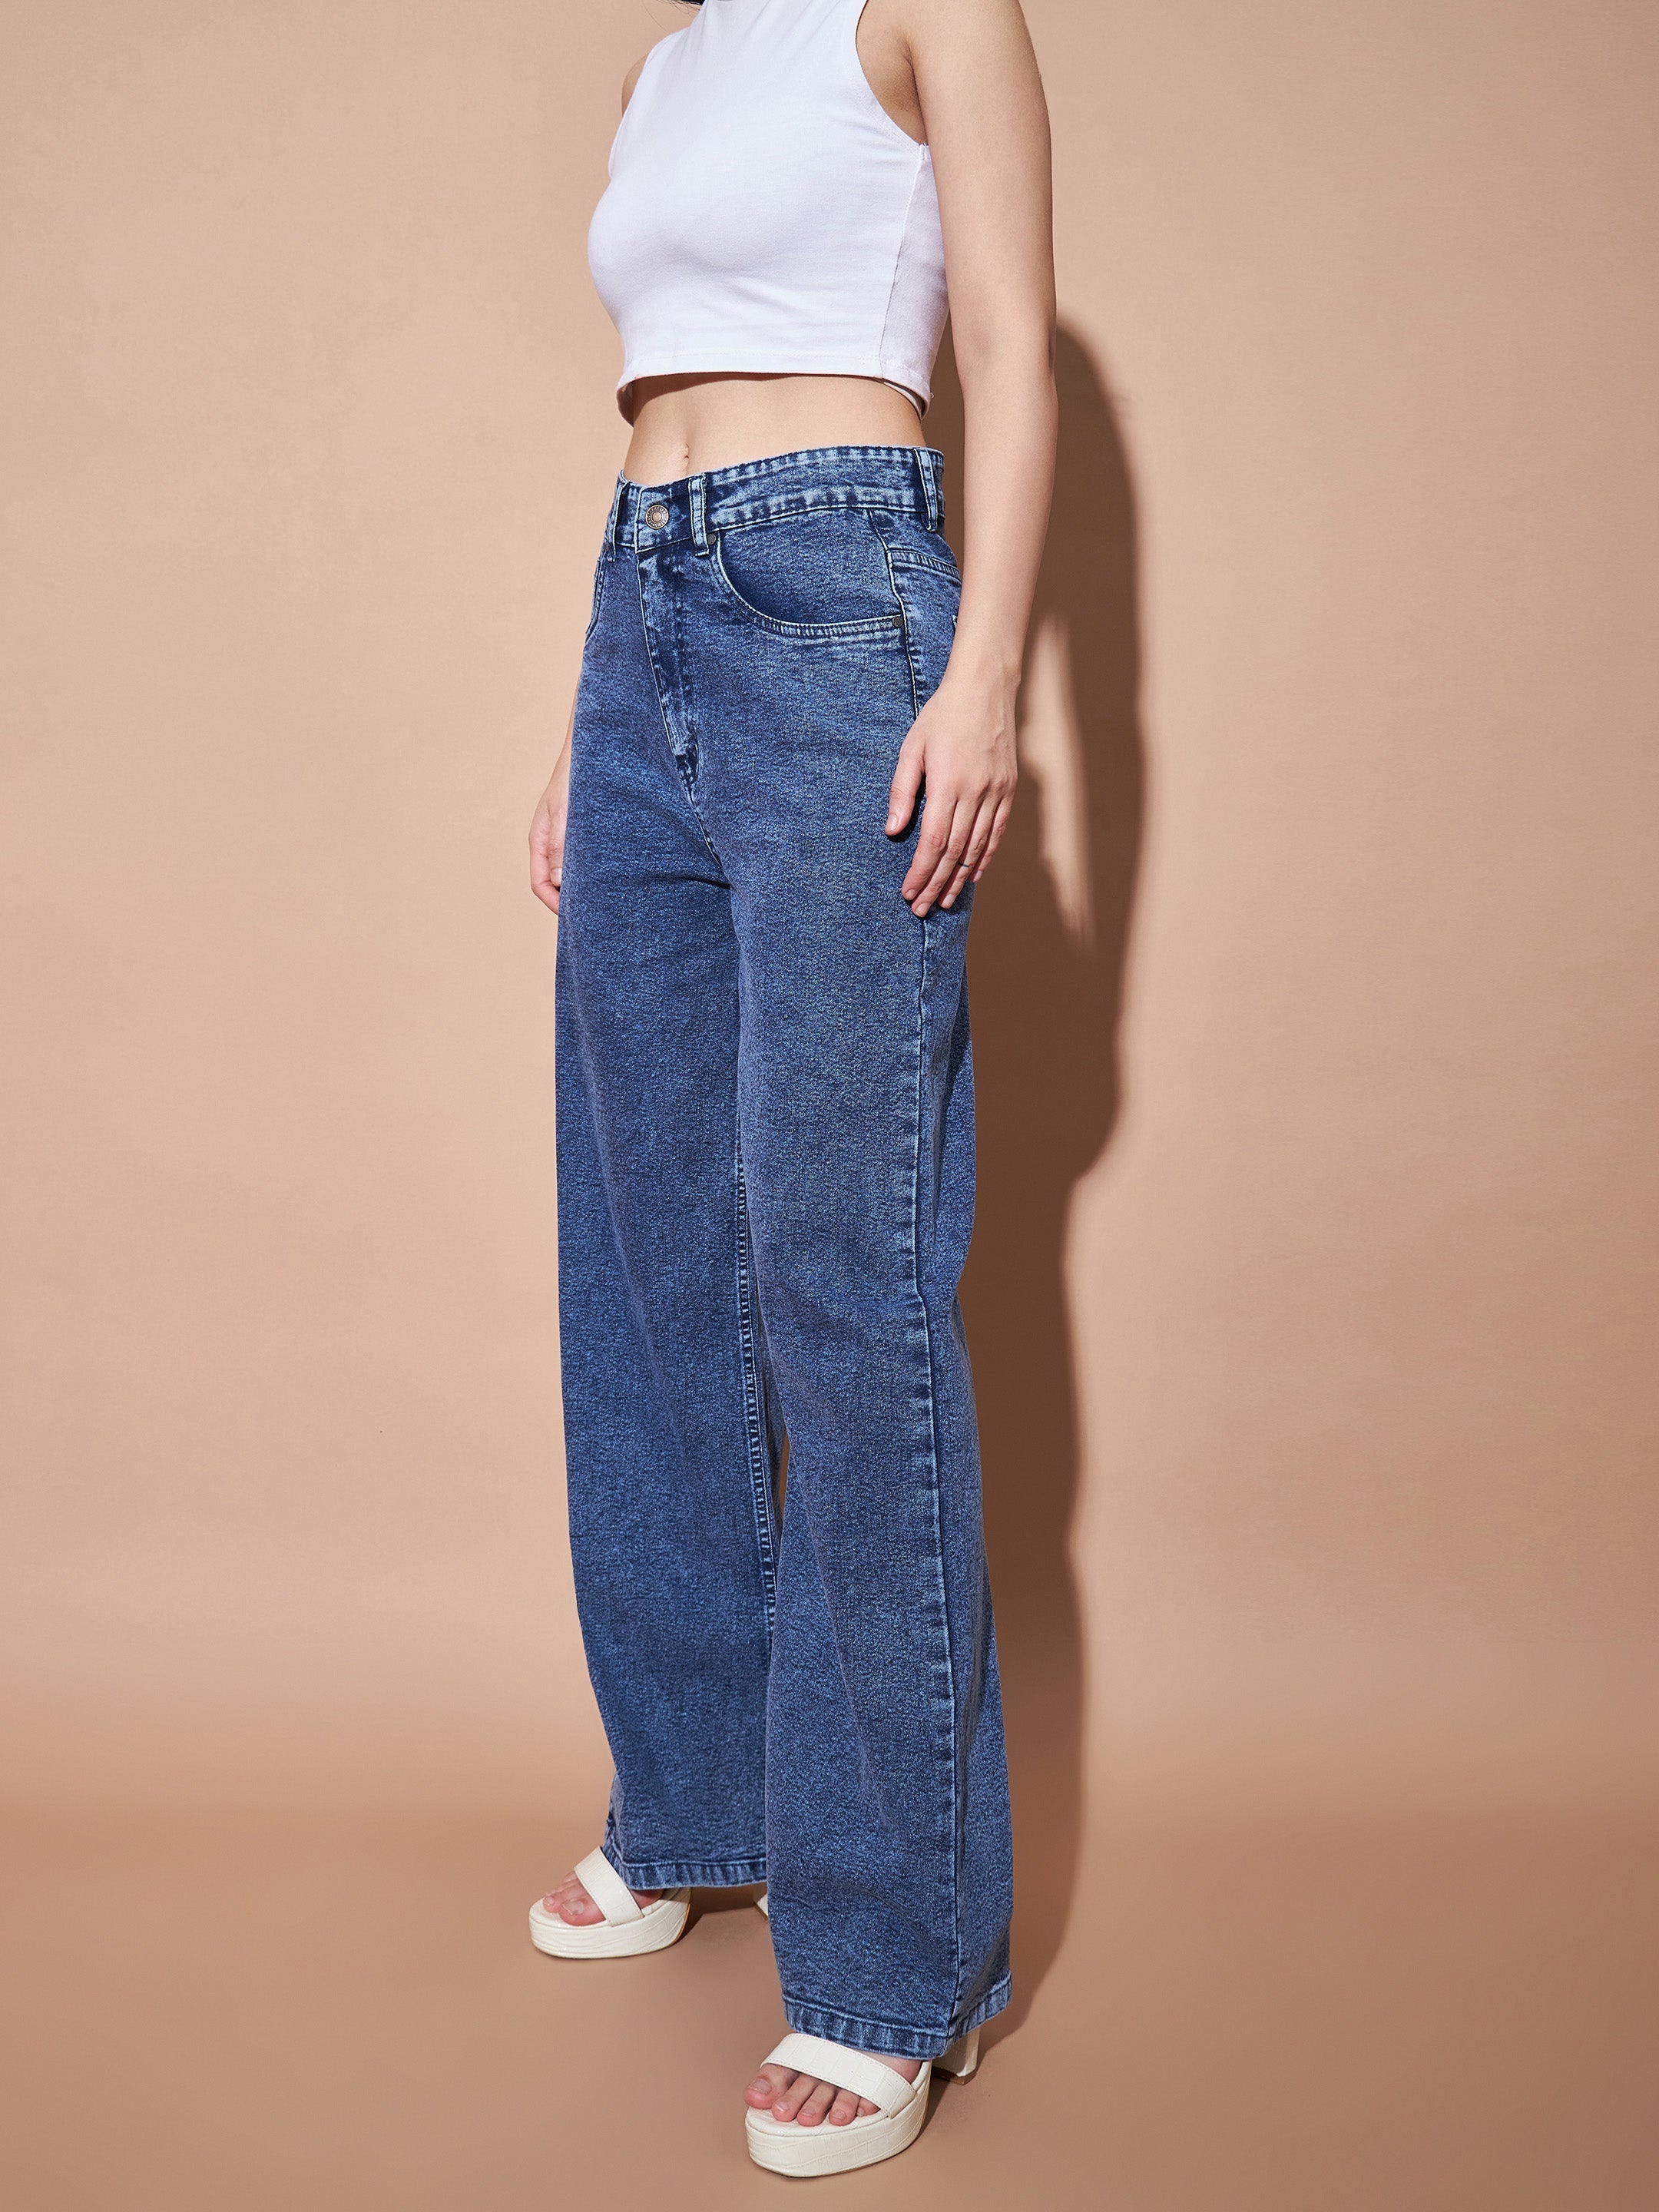 Women's Blue High Waist Straight Jeans - Lyush